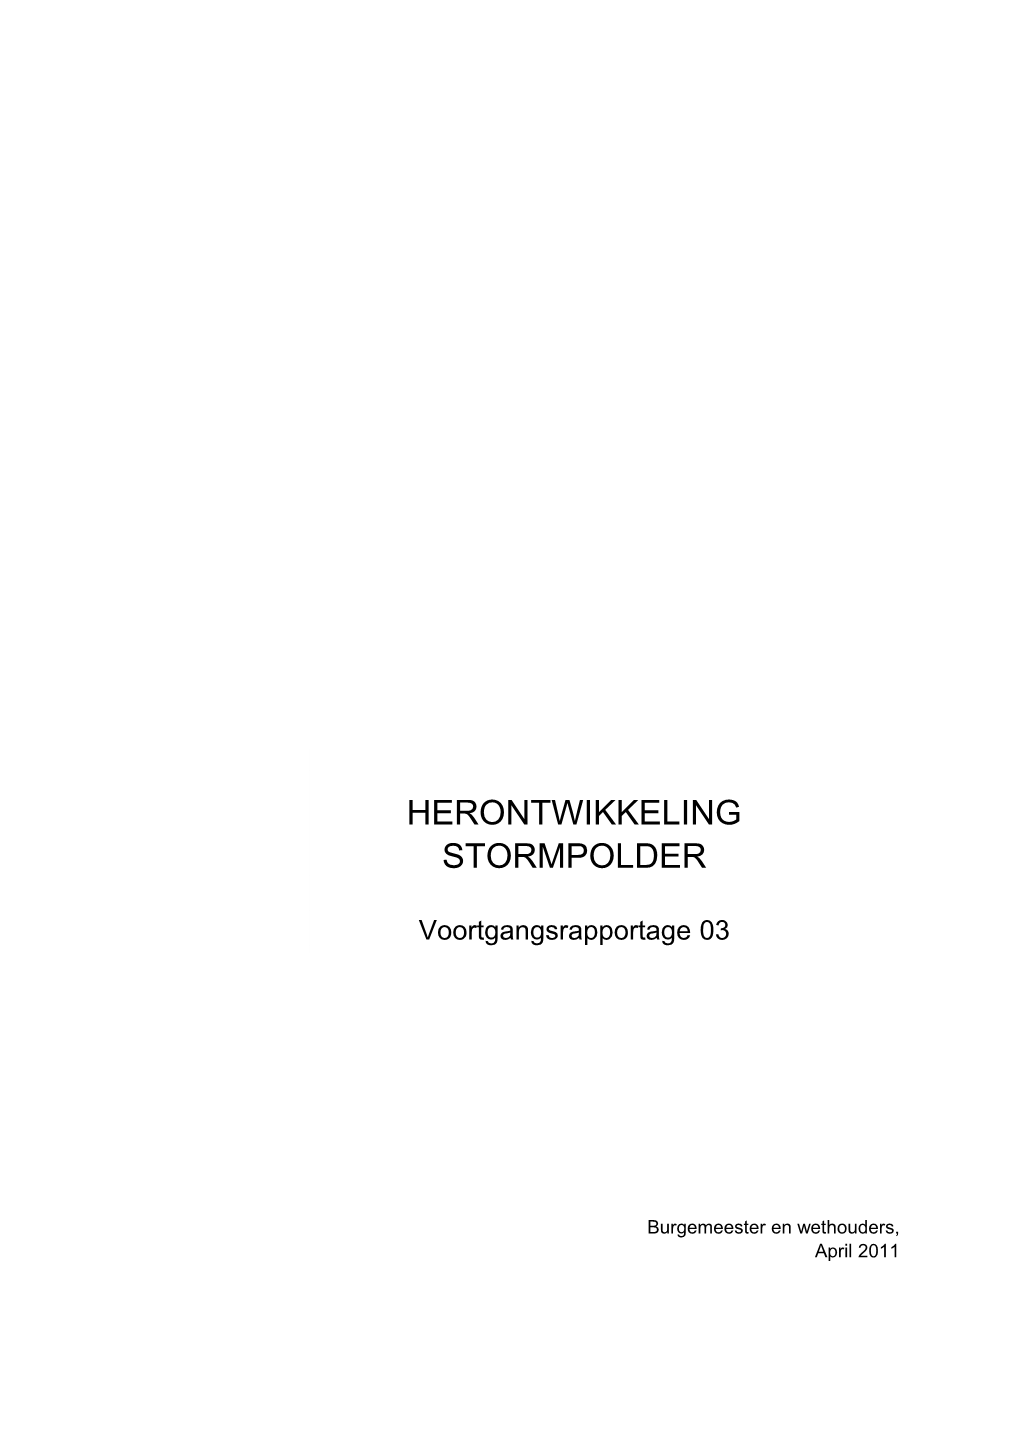 Voortgangsrapportage 3 Herontwikkeling Stormpolder